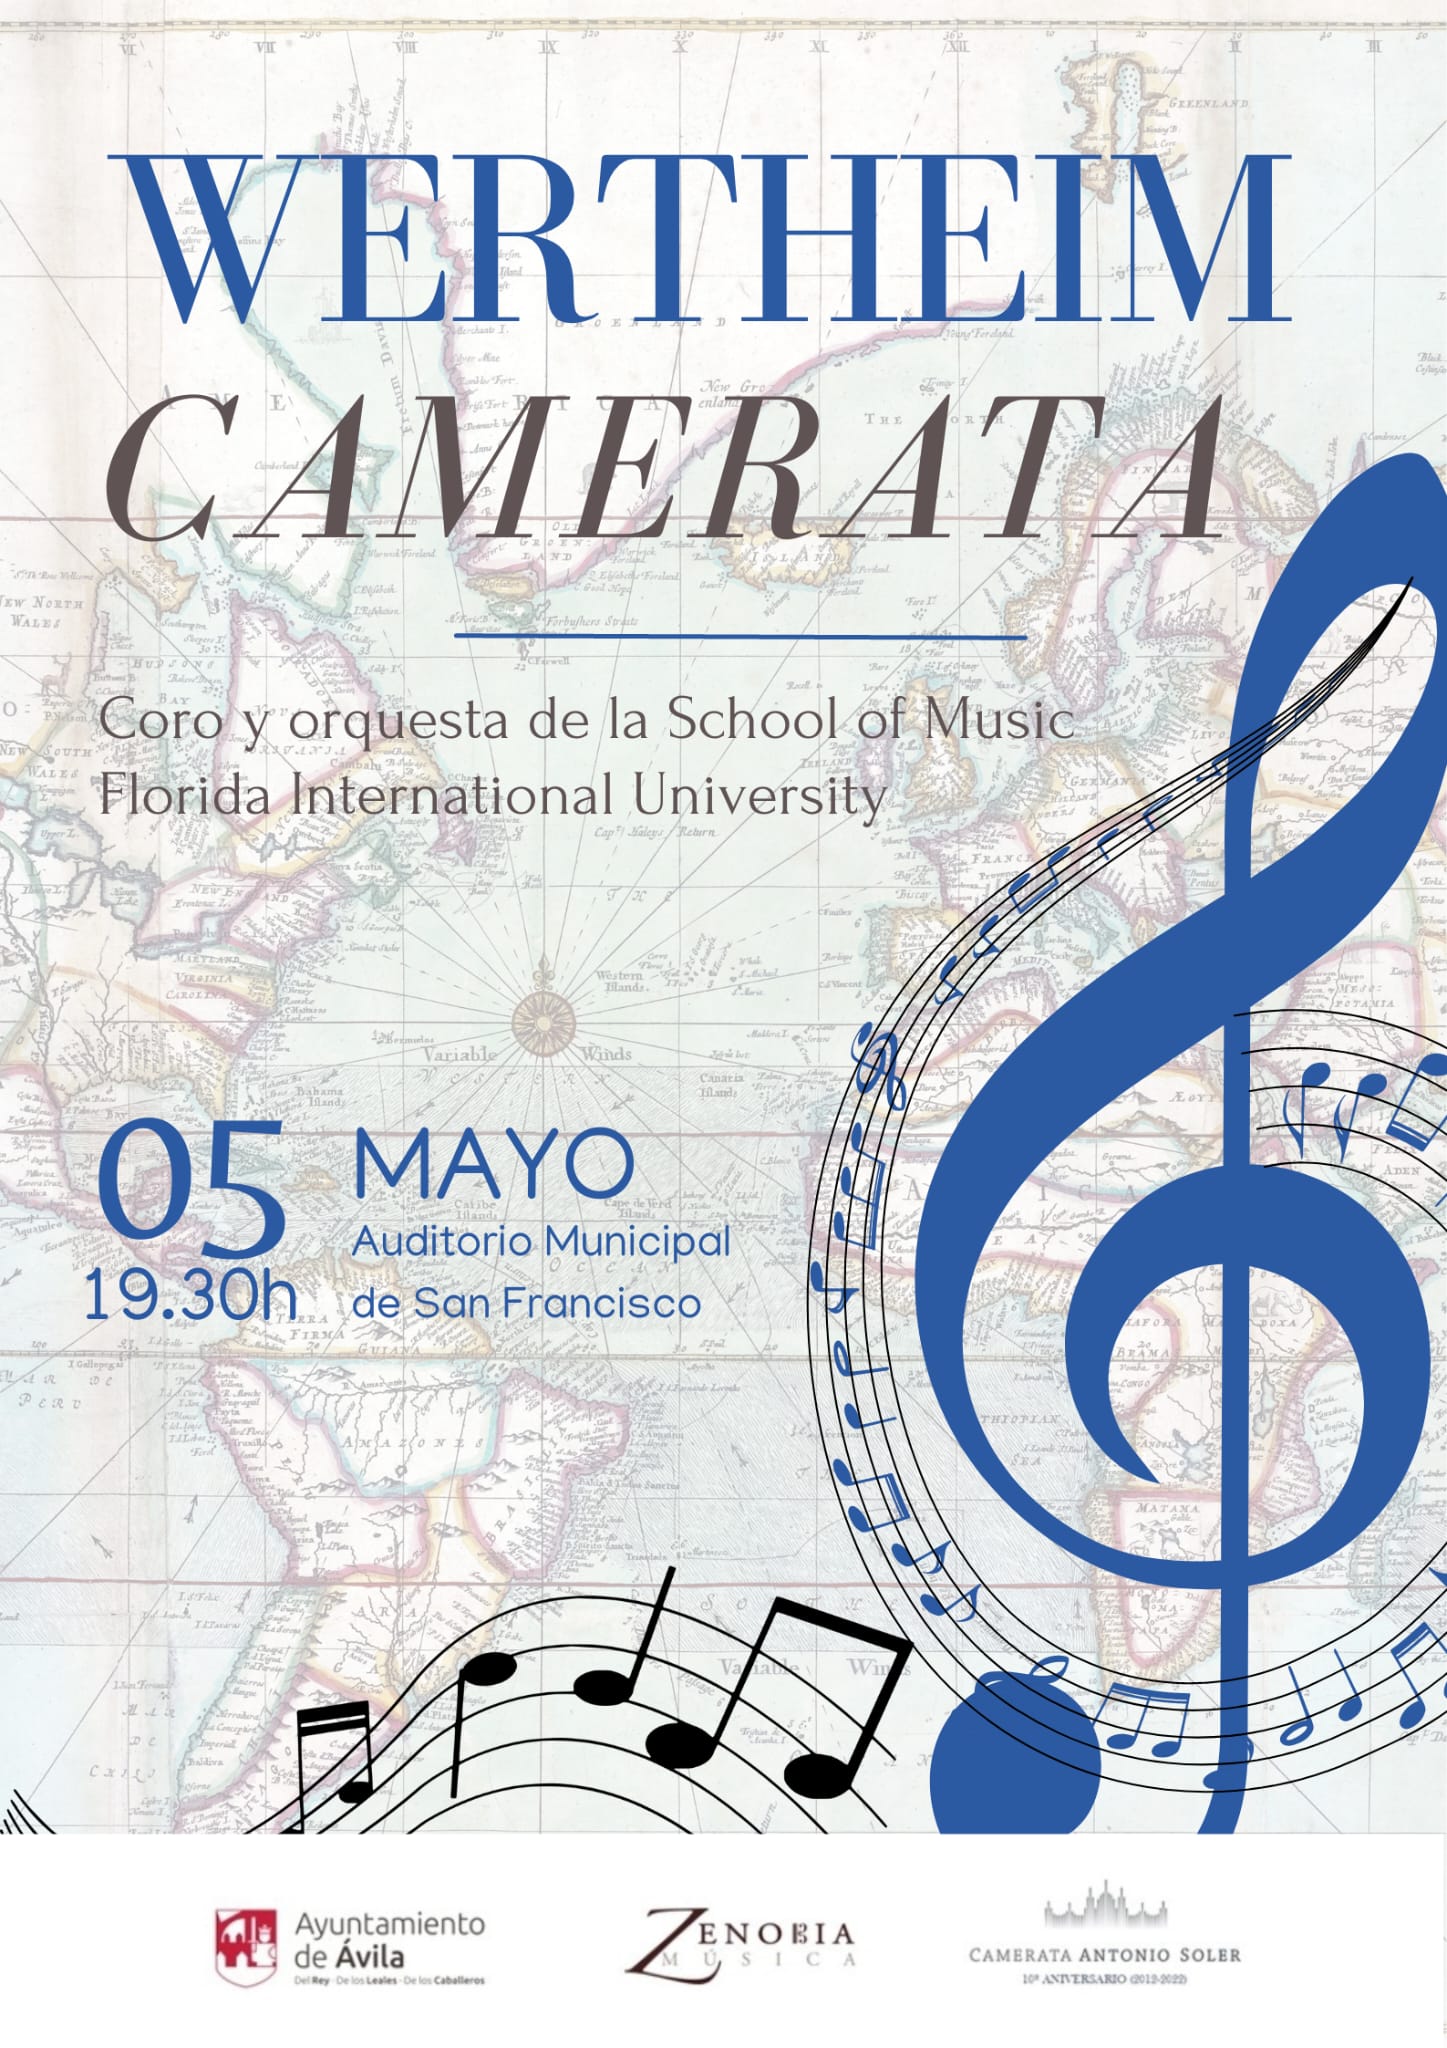 Wertheim Camerata. Coro y orquesta de la School of Music Florida International University Ávila Turismo